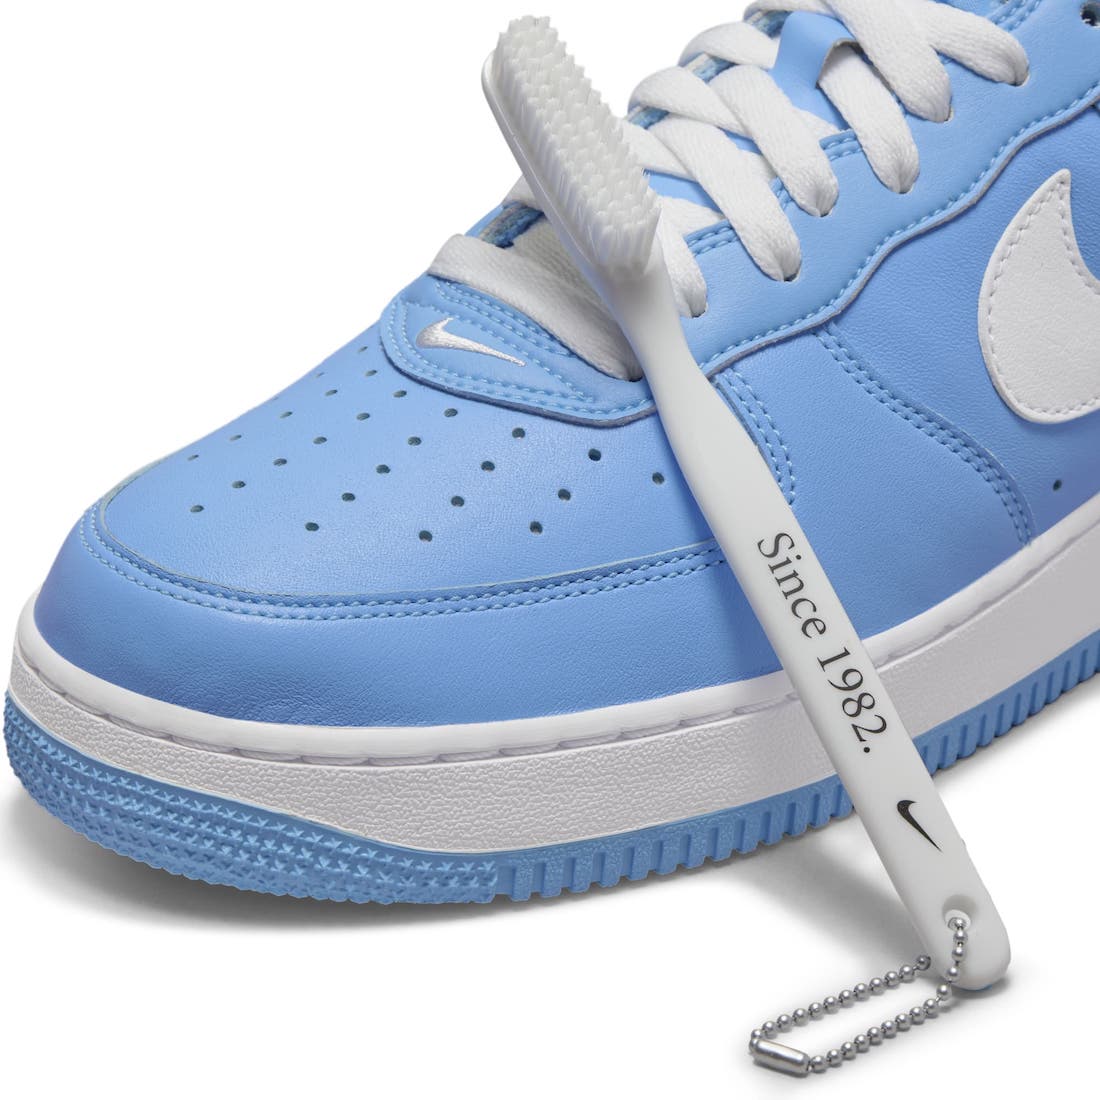 Nike Air Force 1 Low Since 82 University Blue DM0576-400 Release Date